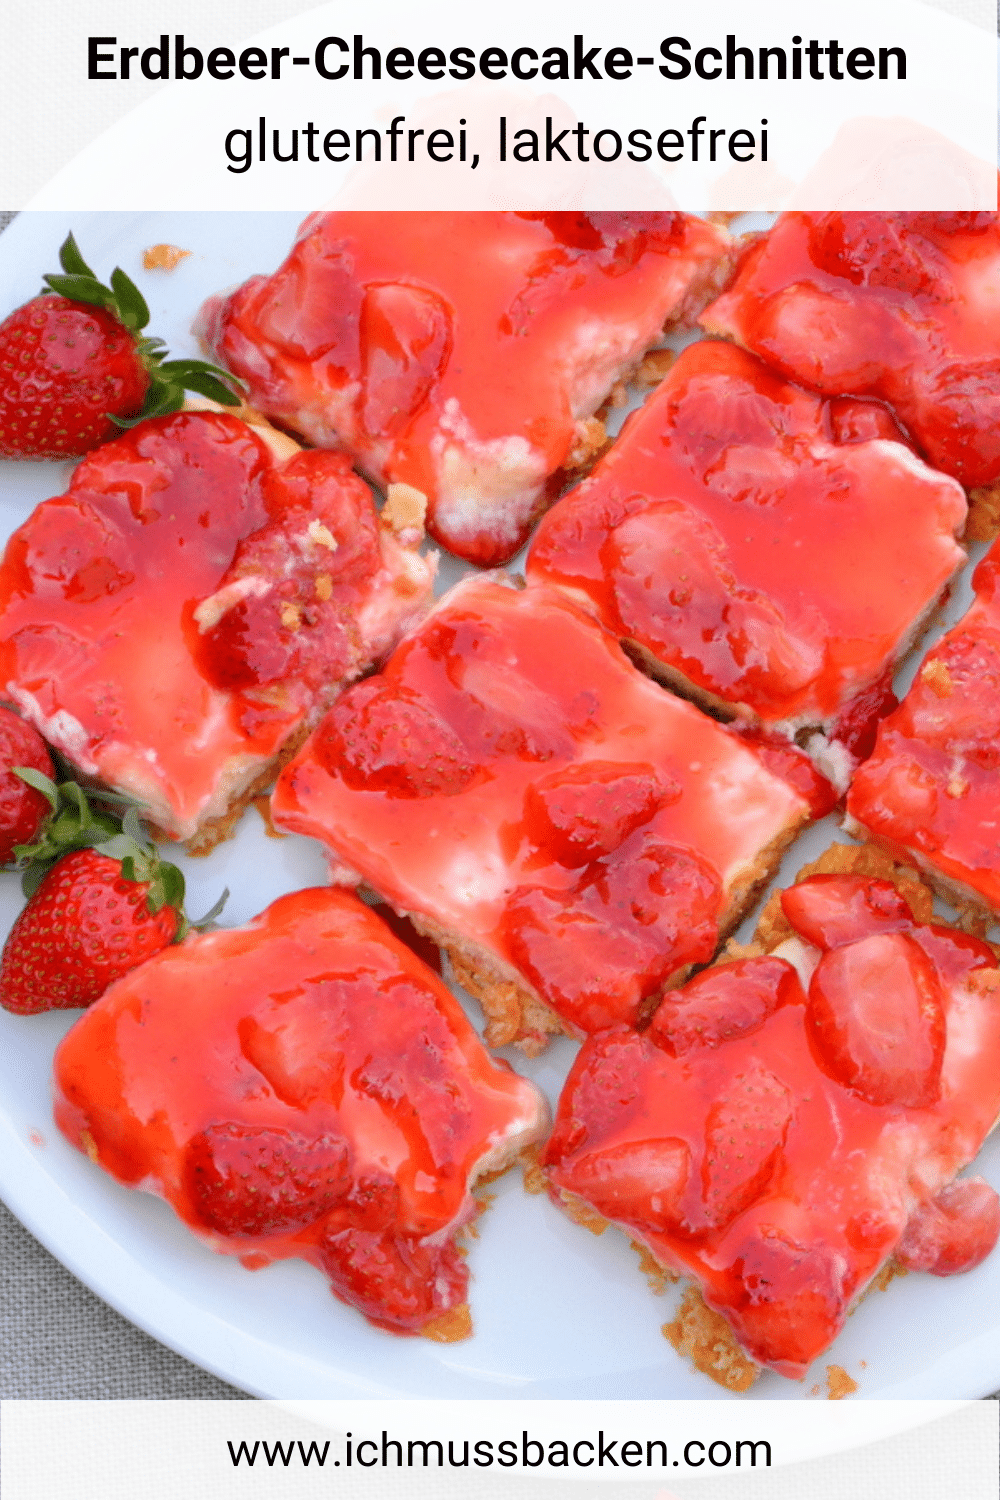 Erdbeer-Cheesecake-Schnitten, glutenfrei, laktosefrei